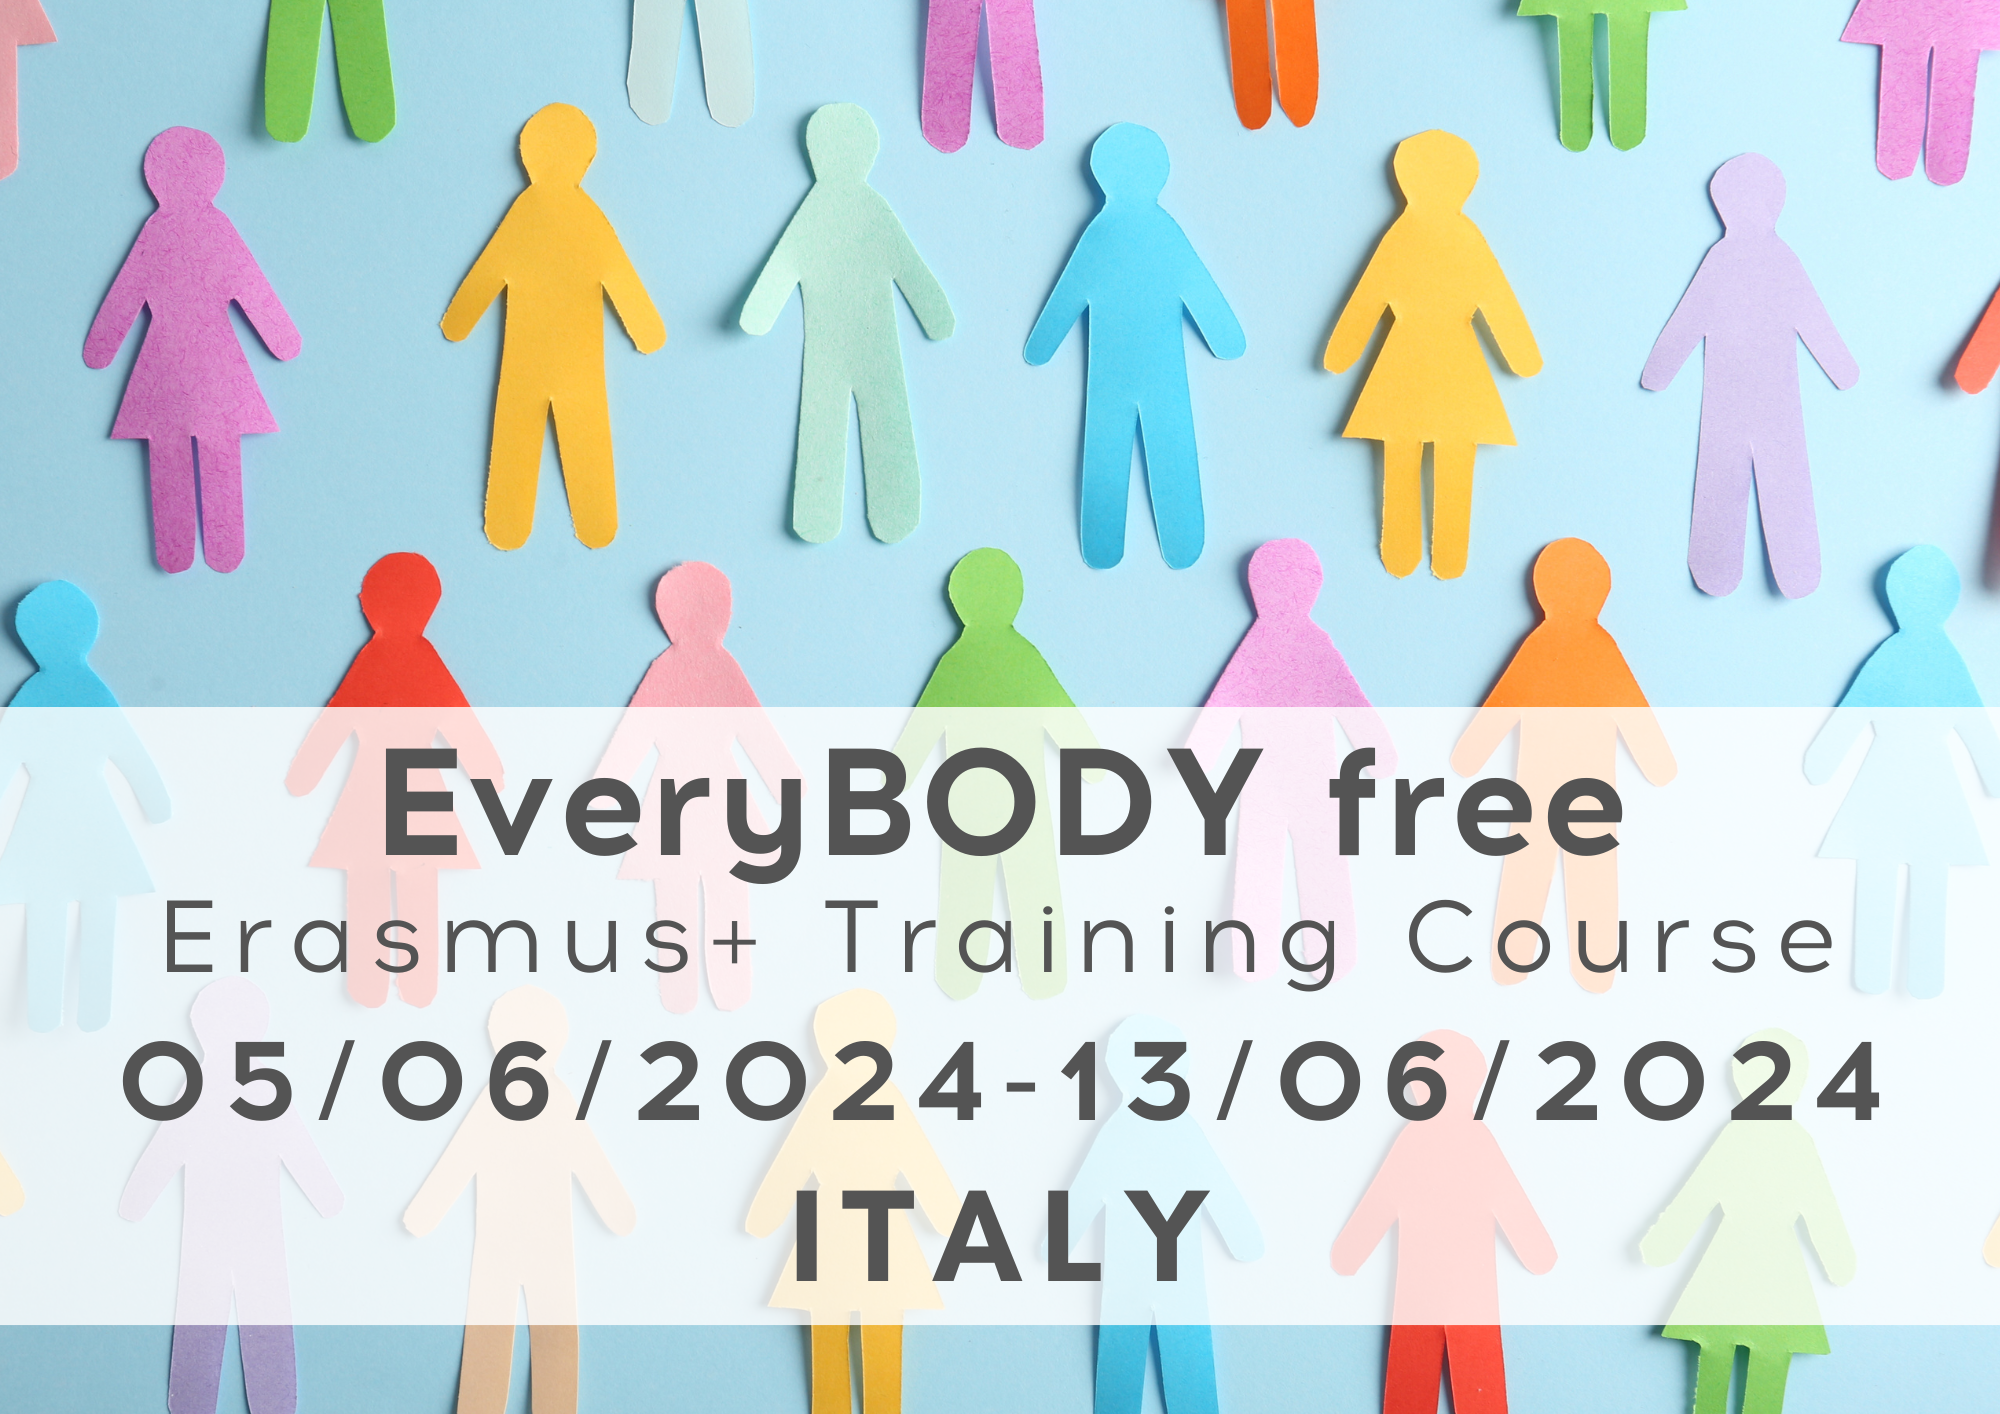 Erasmus+ Training Course "EveryBODY free" 05/06/2024 - 13/06/2024 in Italy.